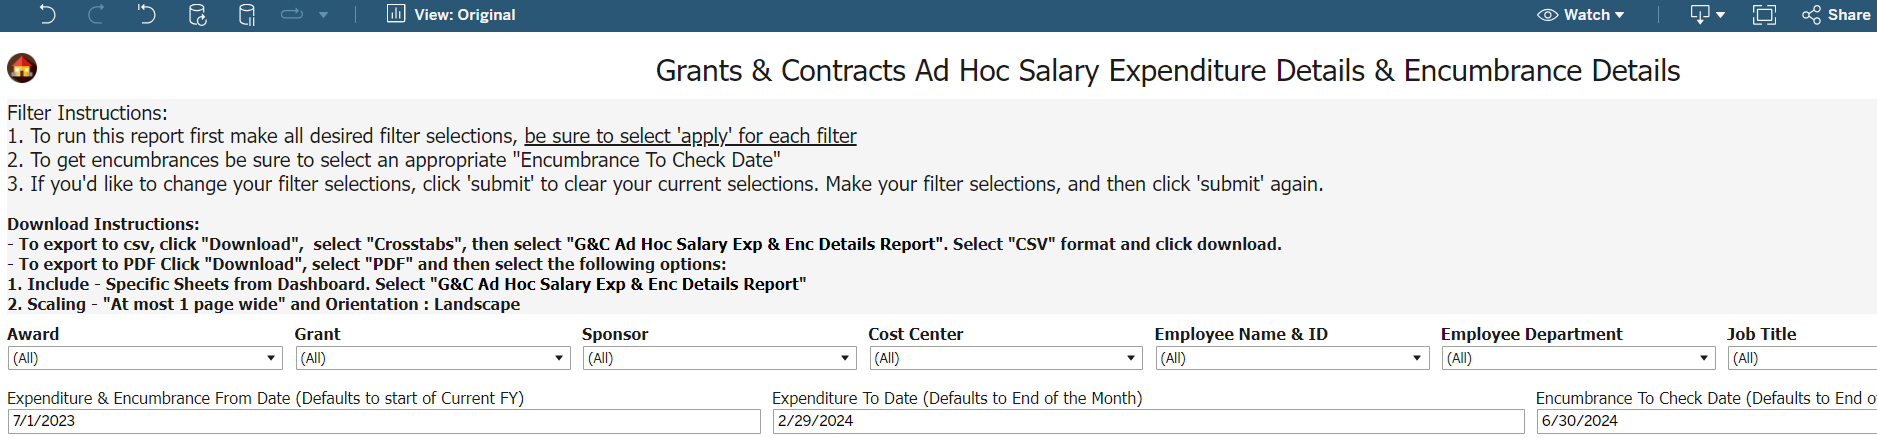 Grants & Contracts Ad Hoc Salary Expenditure Details & Encumbrances Details